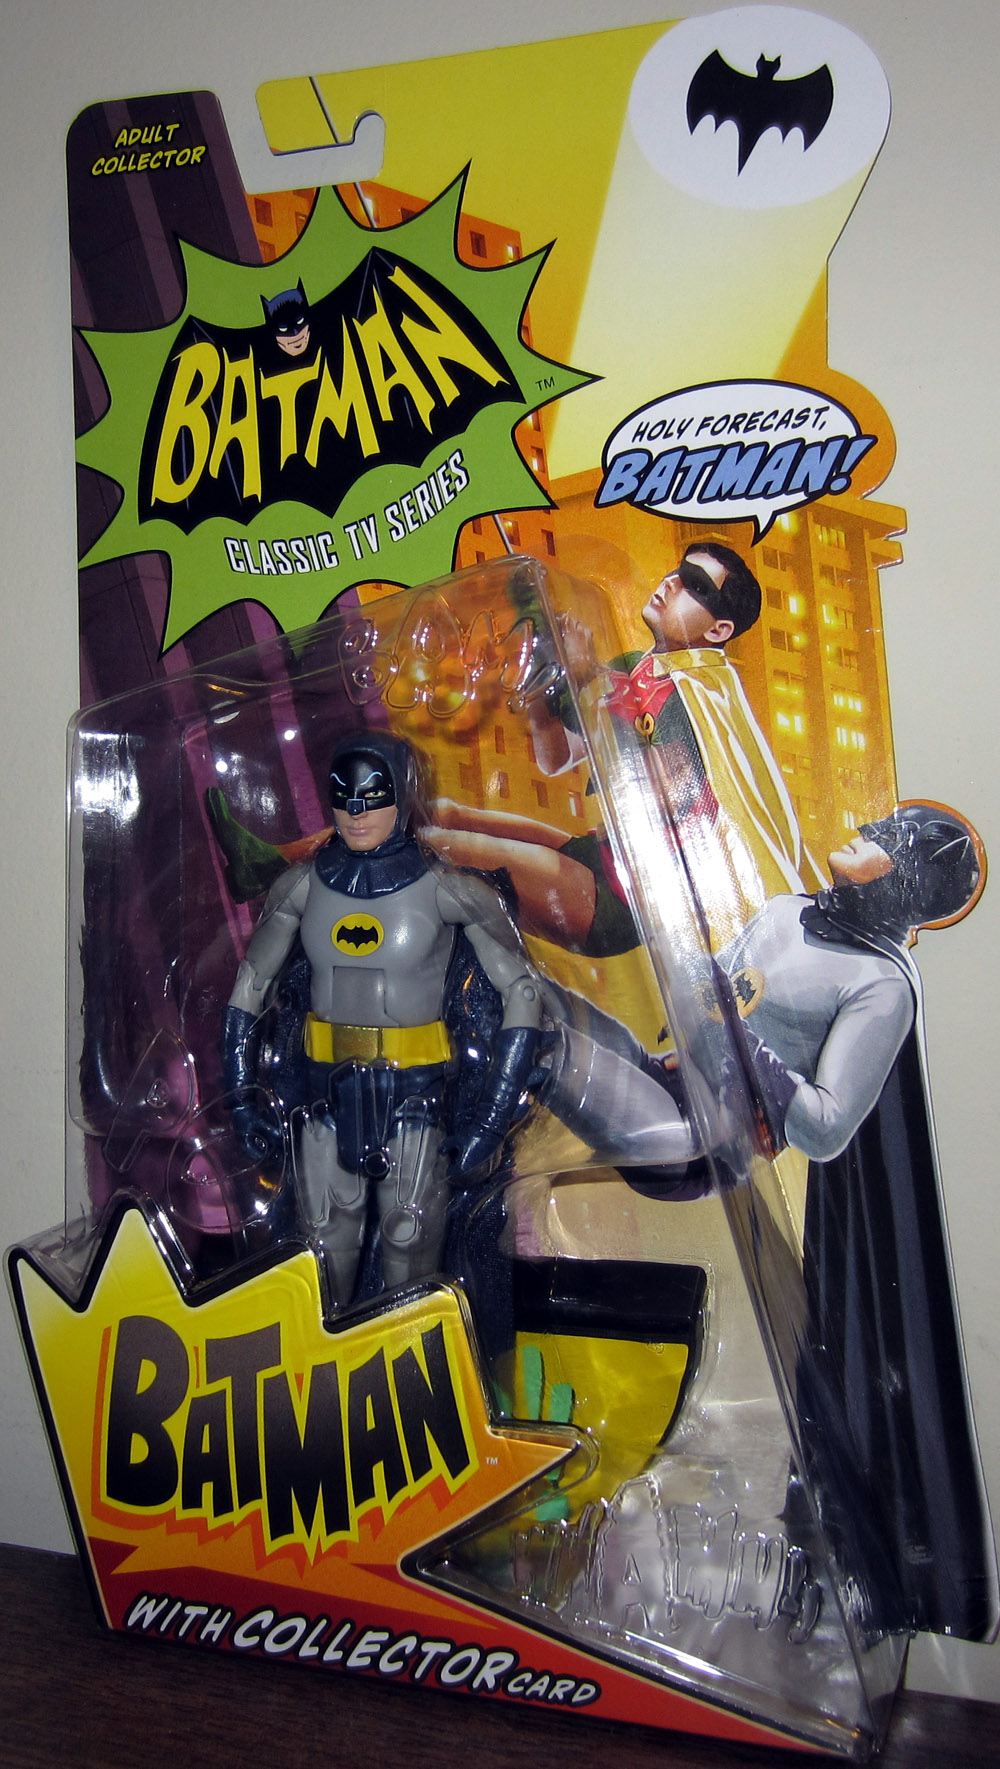 Batman Classic TV Series action figure